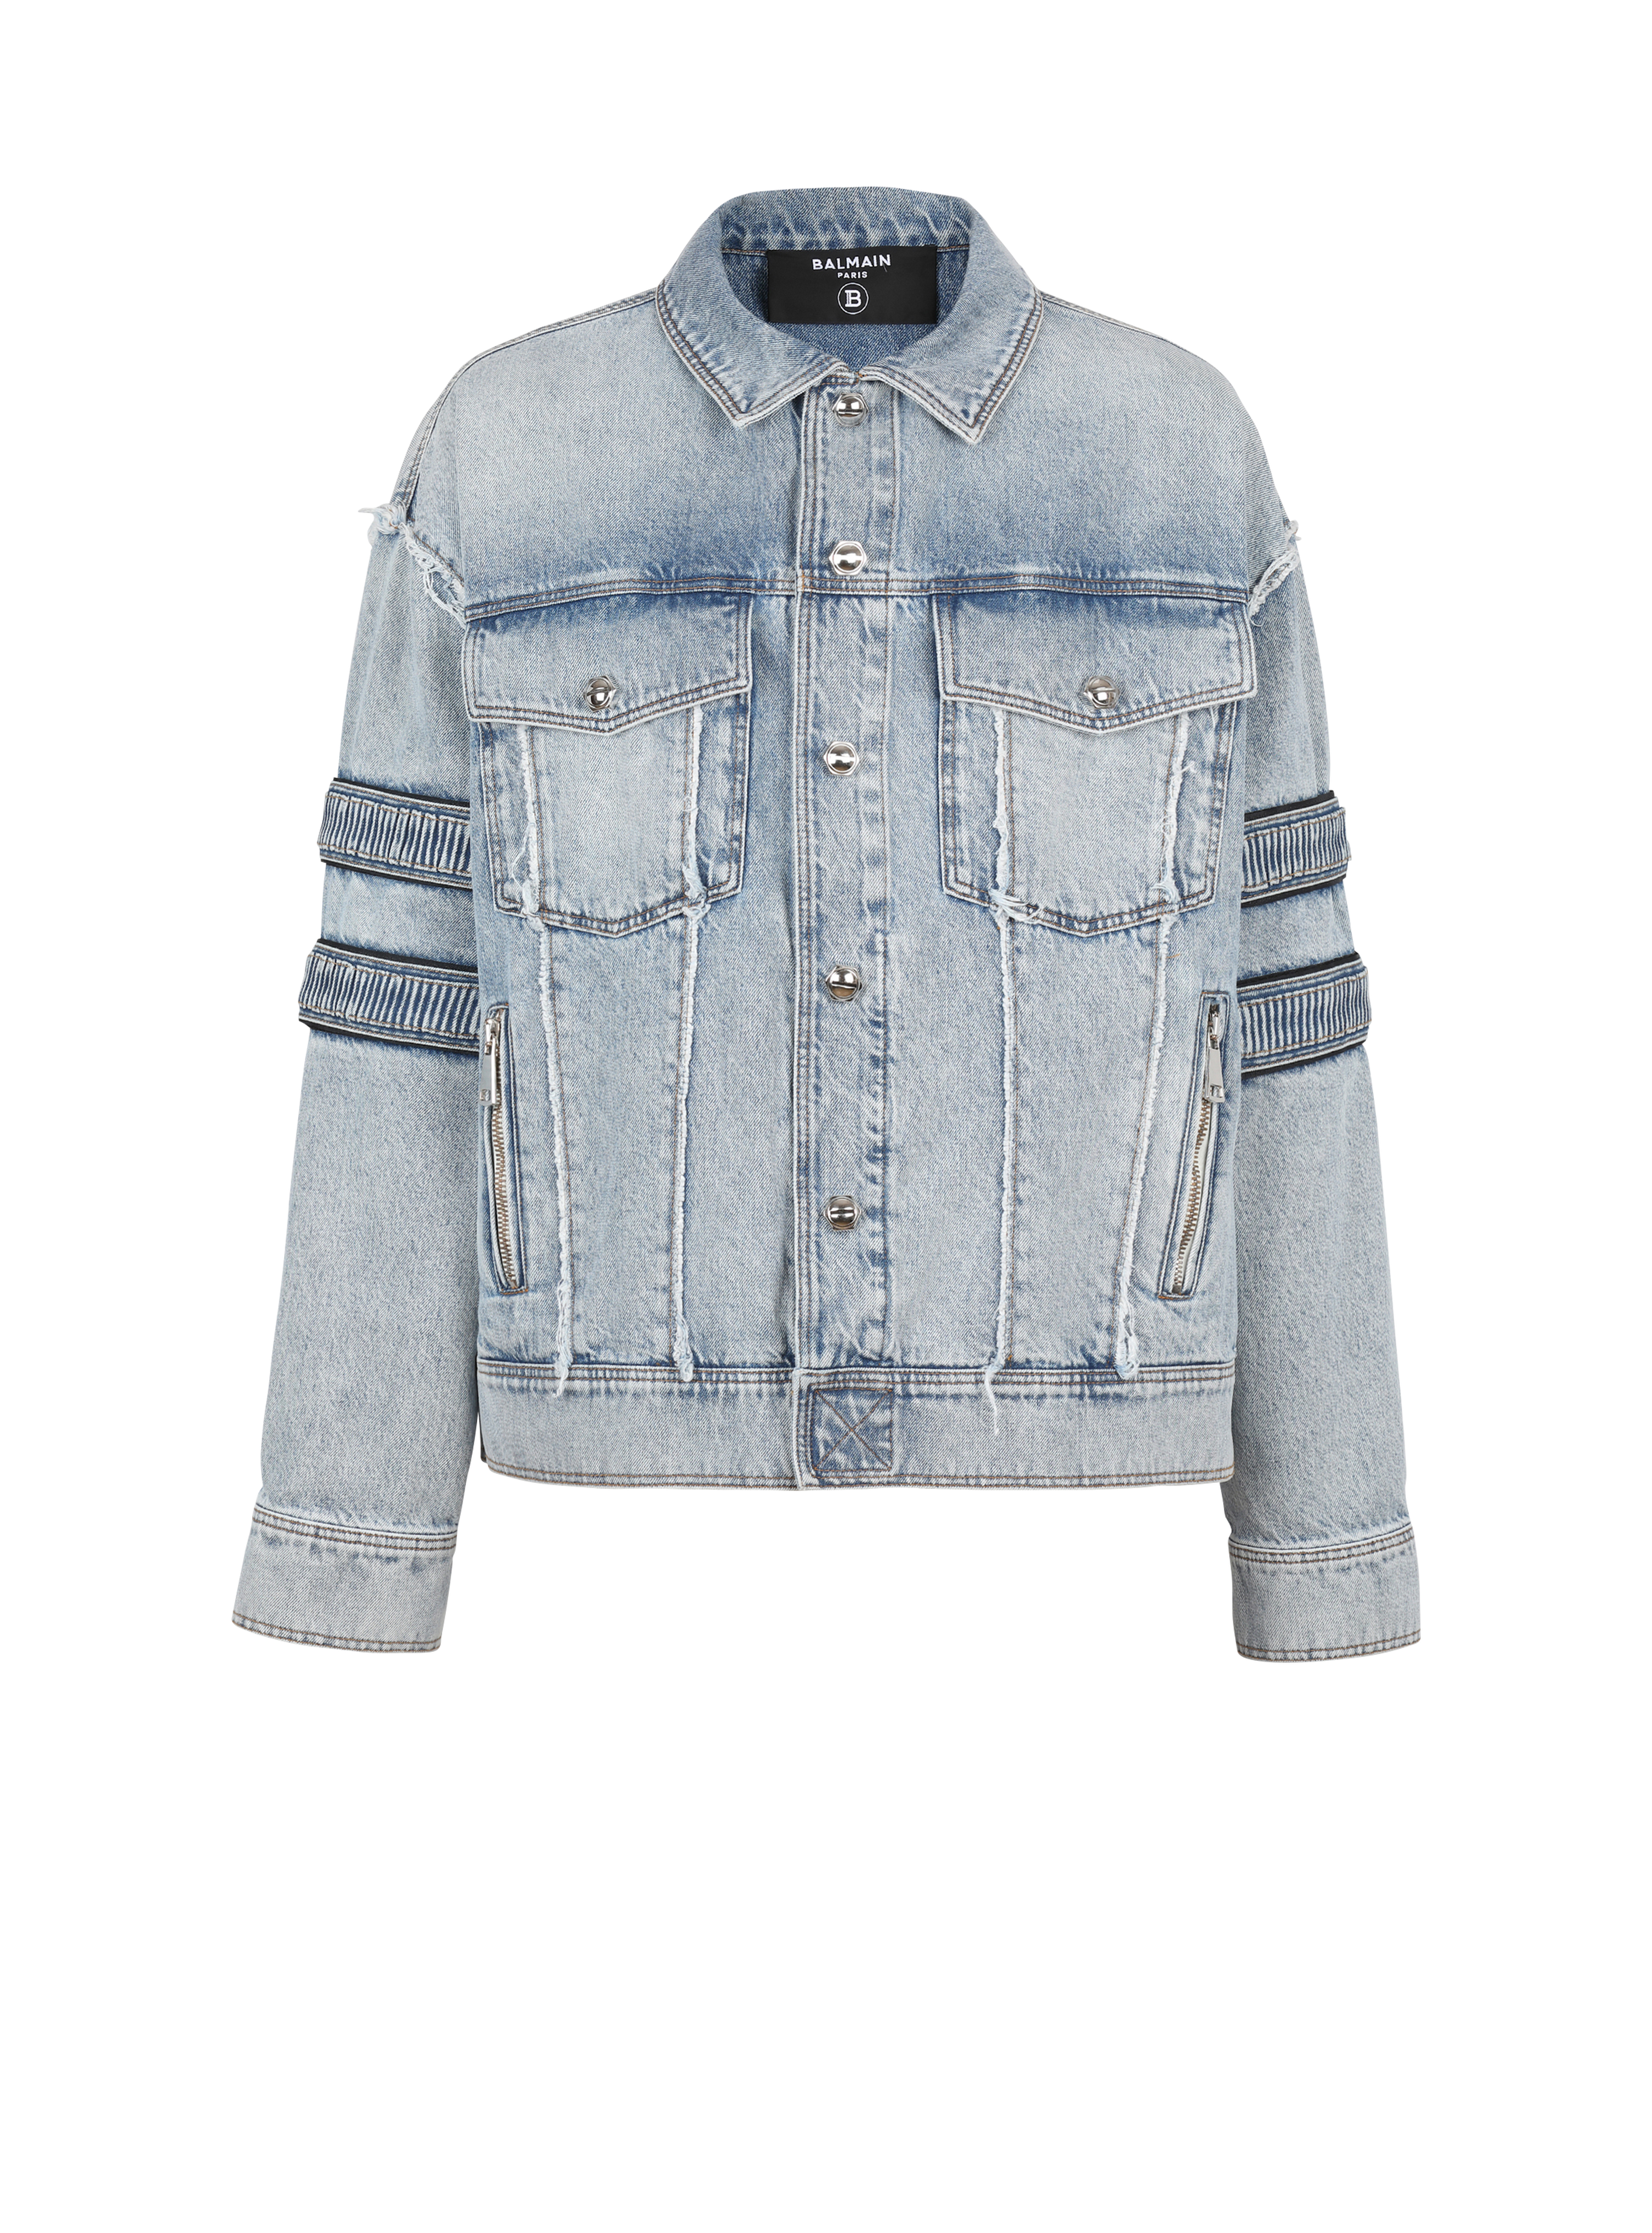 Denim jacket with velcro stripes, blue